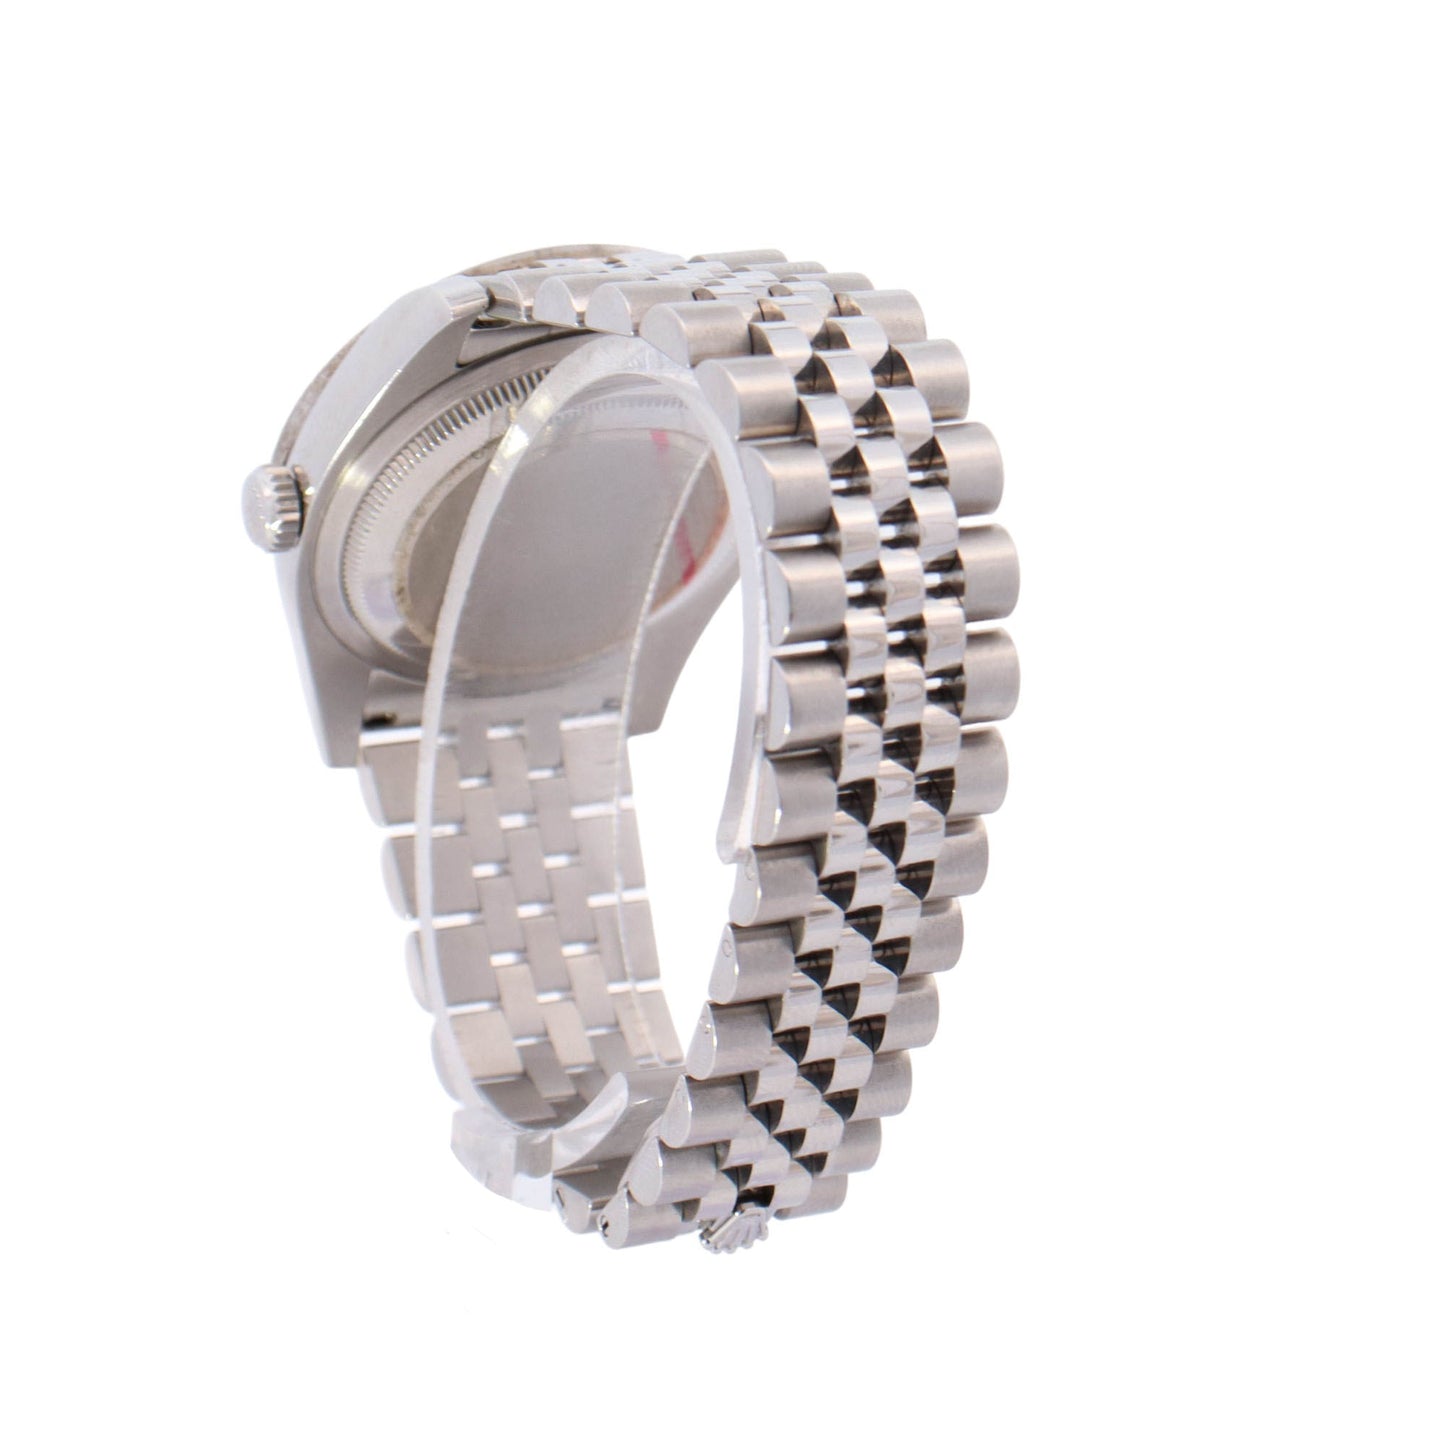 Rolex Datejust Stainless Steel 36mm White Diamond Dot Dial Watch Reference# 116234 - Happy Jewelers Fine Jewelry Lifetime Warranty